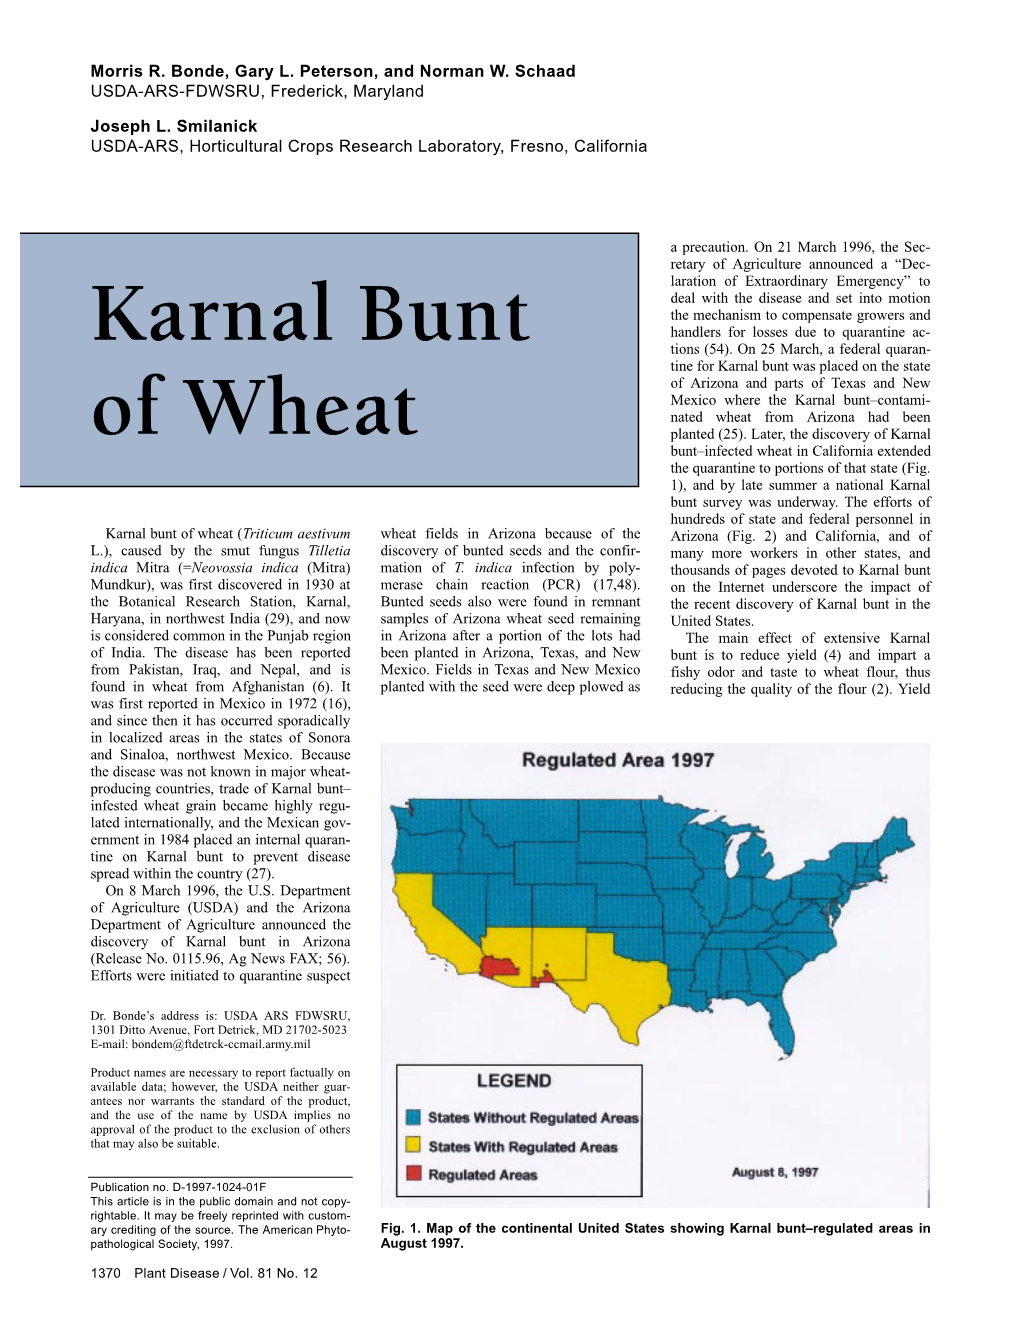 Karnal Bunt of Wheat (Triticum Aestivum Wheat Fields in Arizona Because of the Arizona (Fig